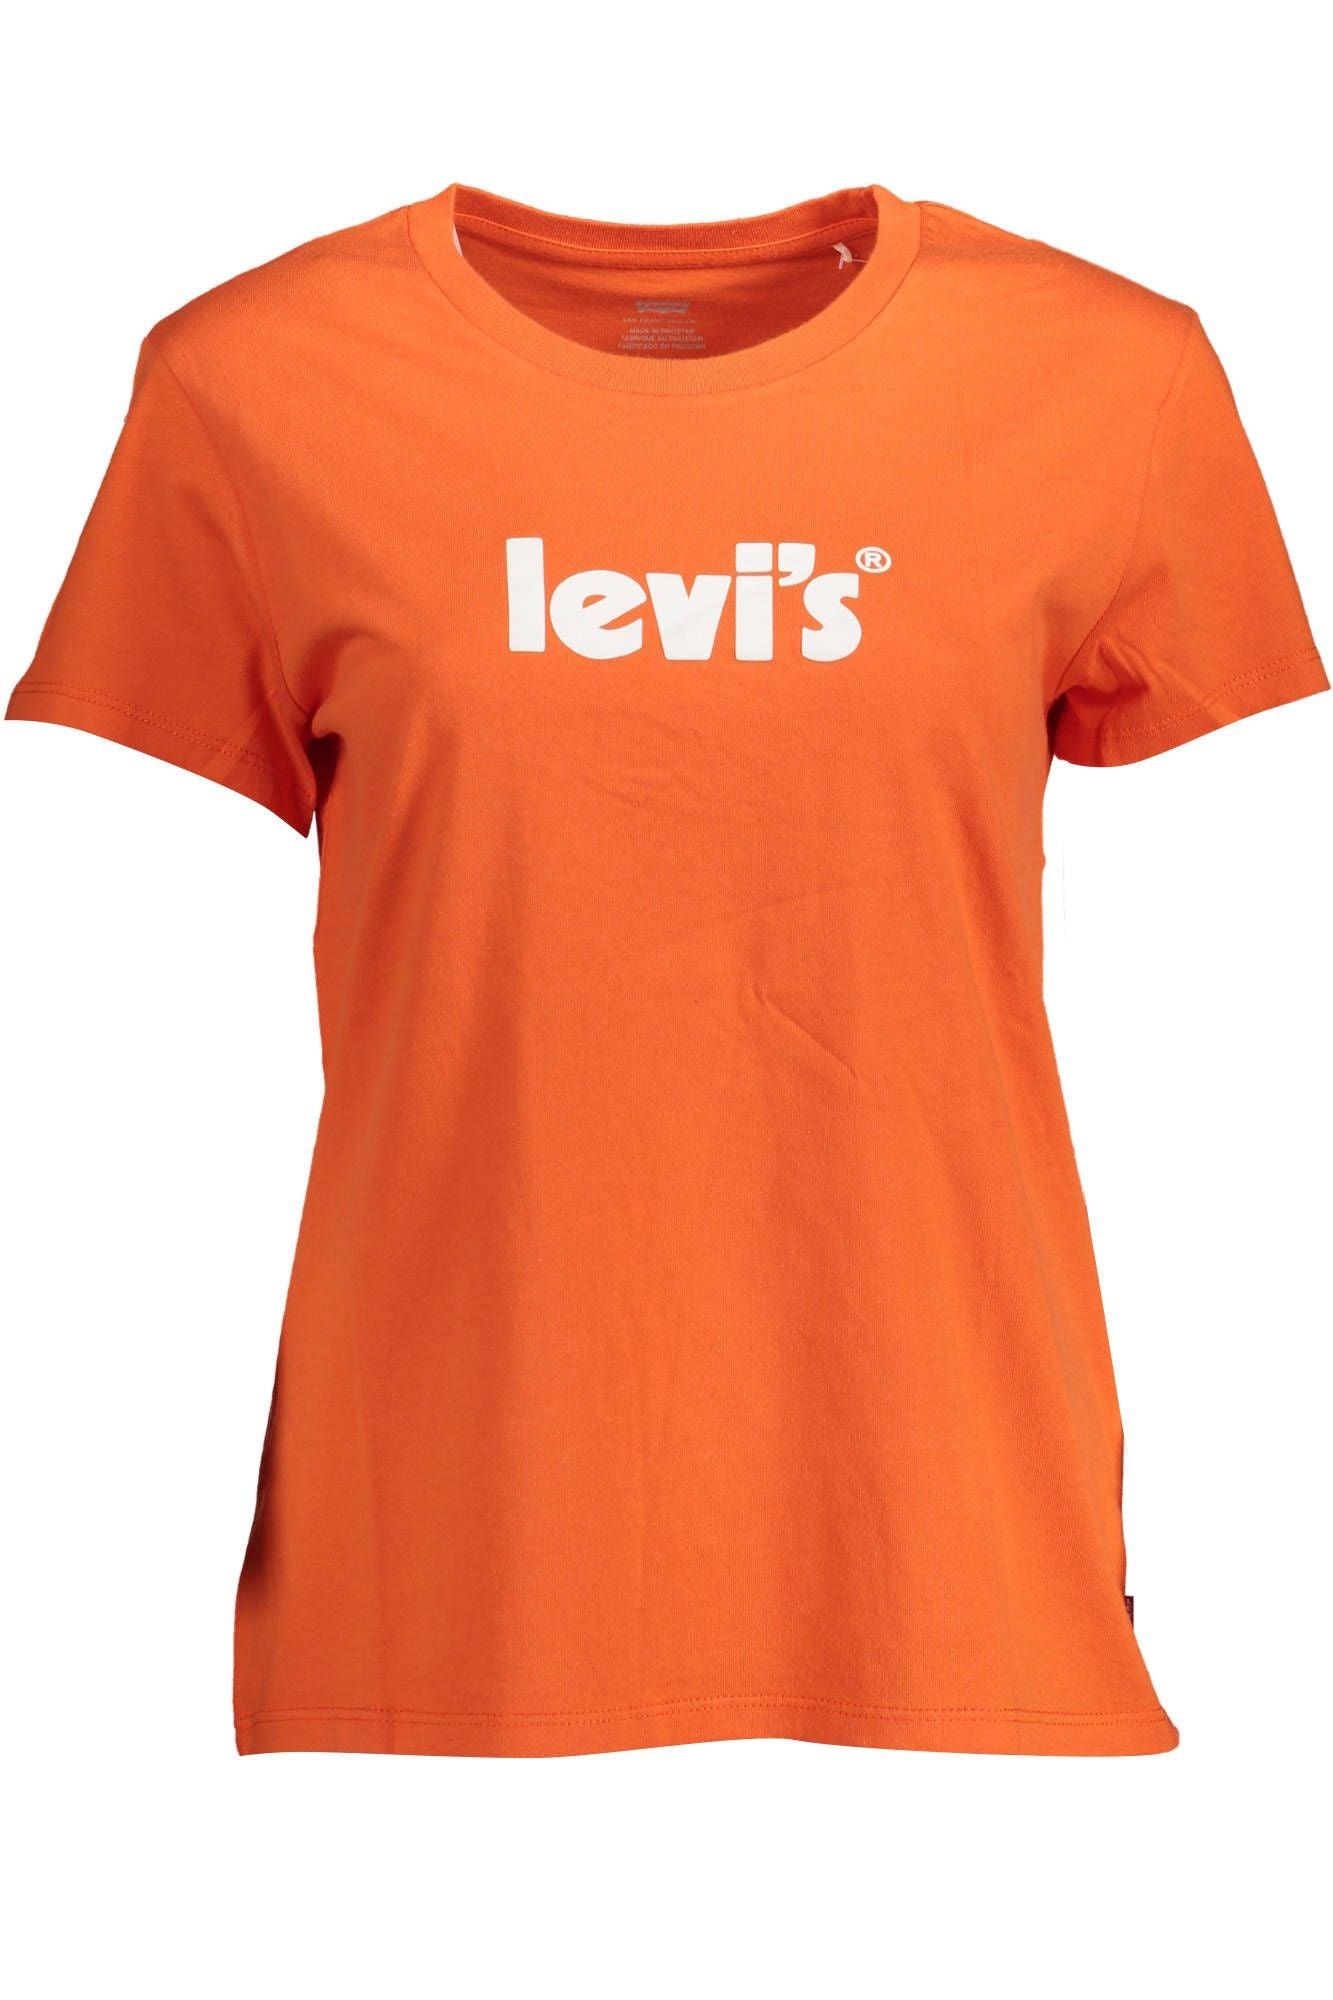 Levi's Chic Orange Logo Print Tee - PER.FASHION